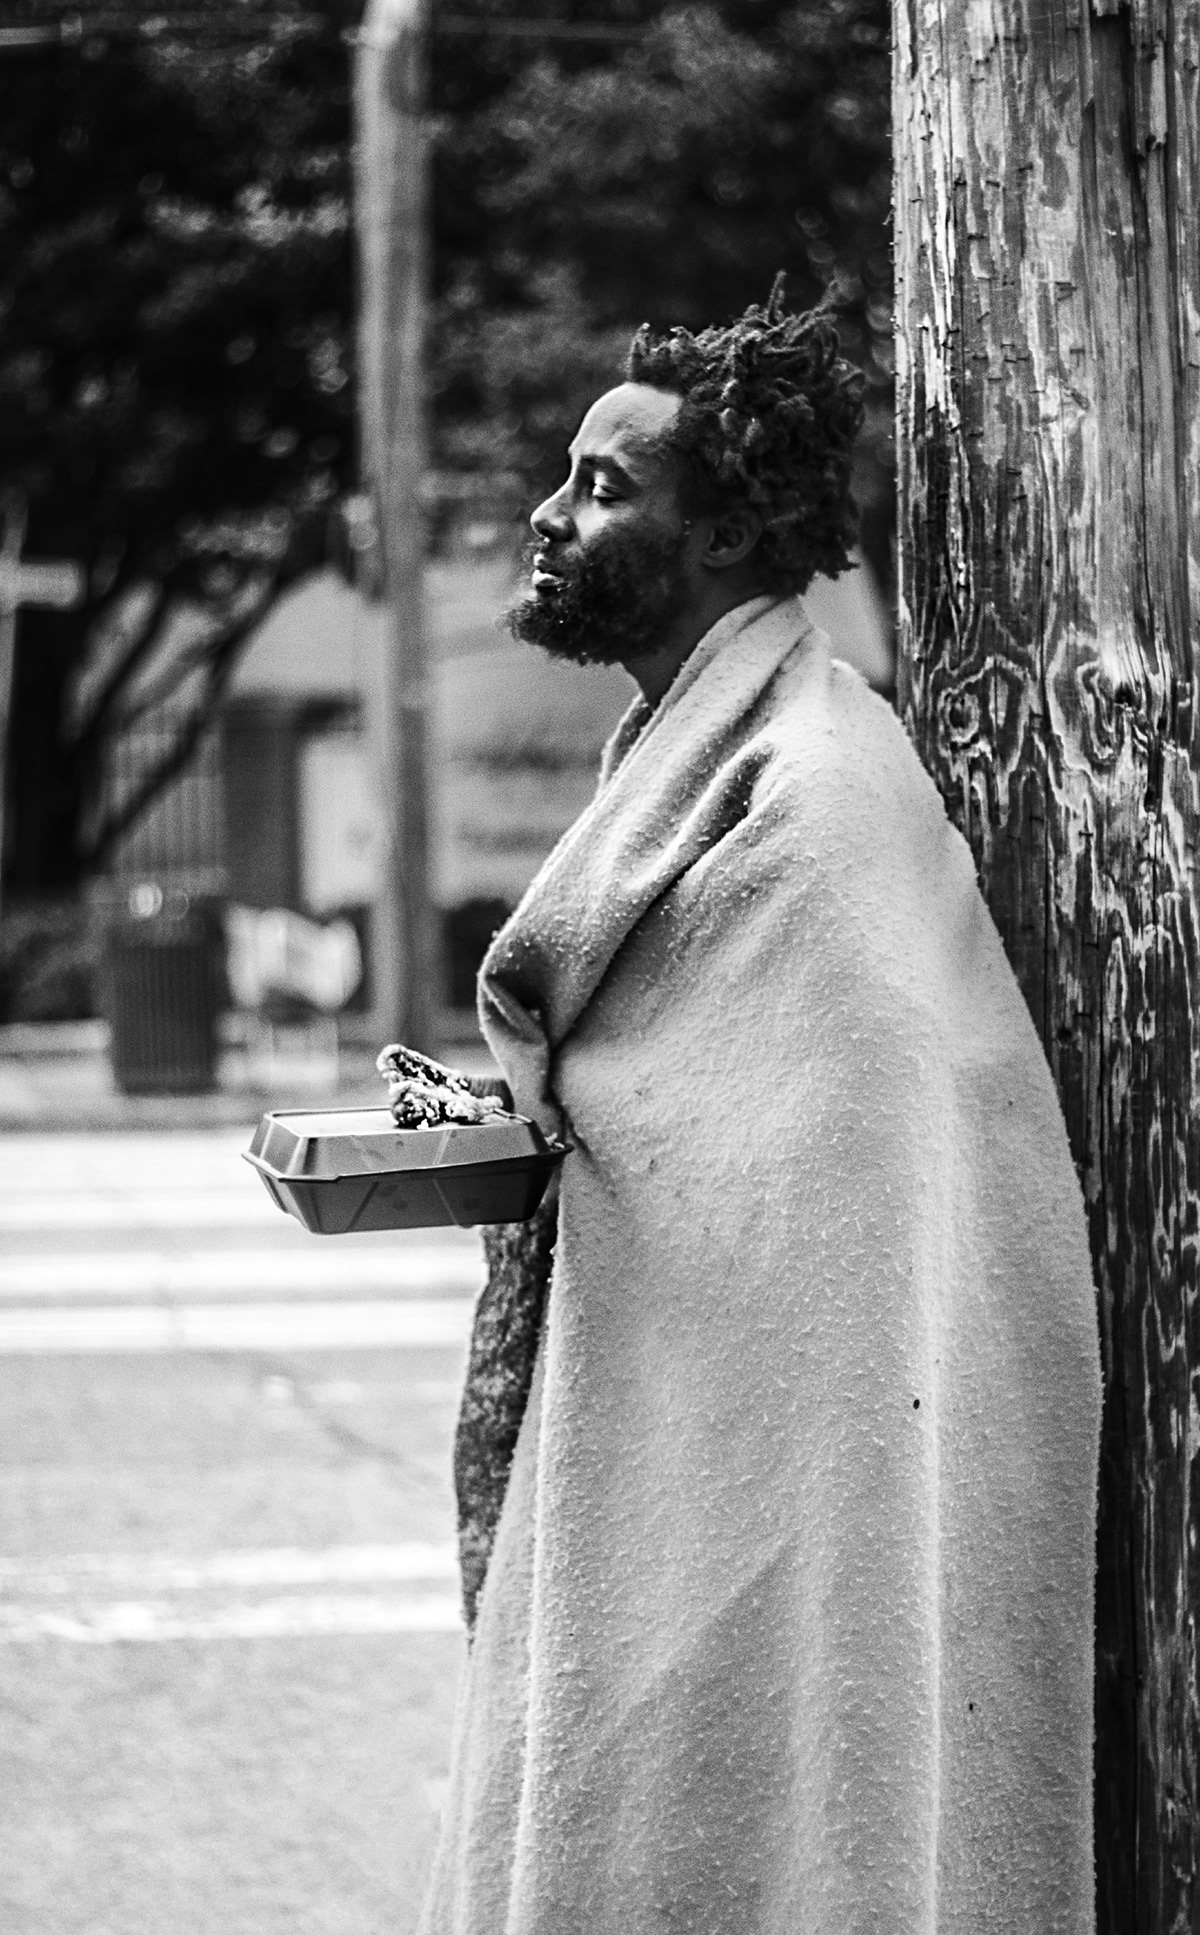 Poverty Gordon Parks candid photos injustice